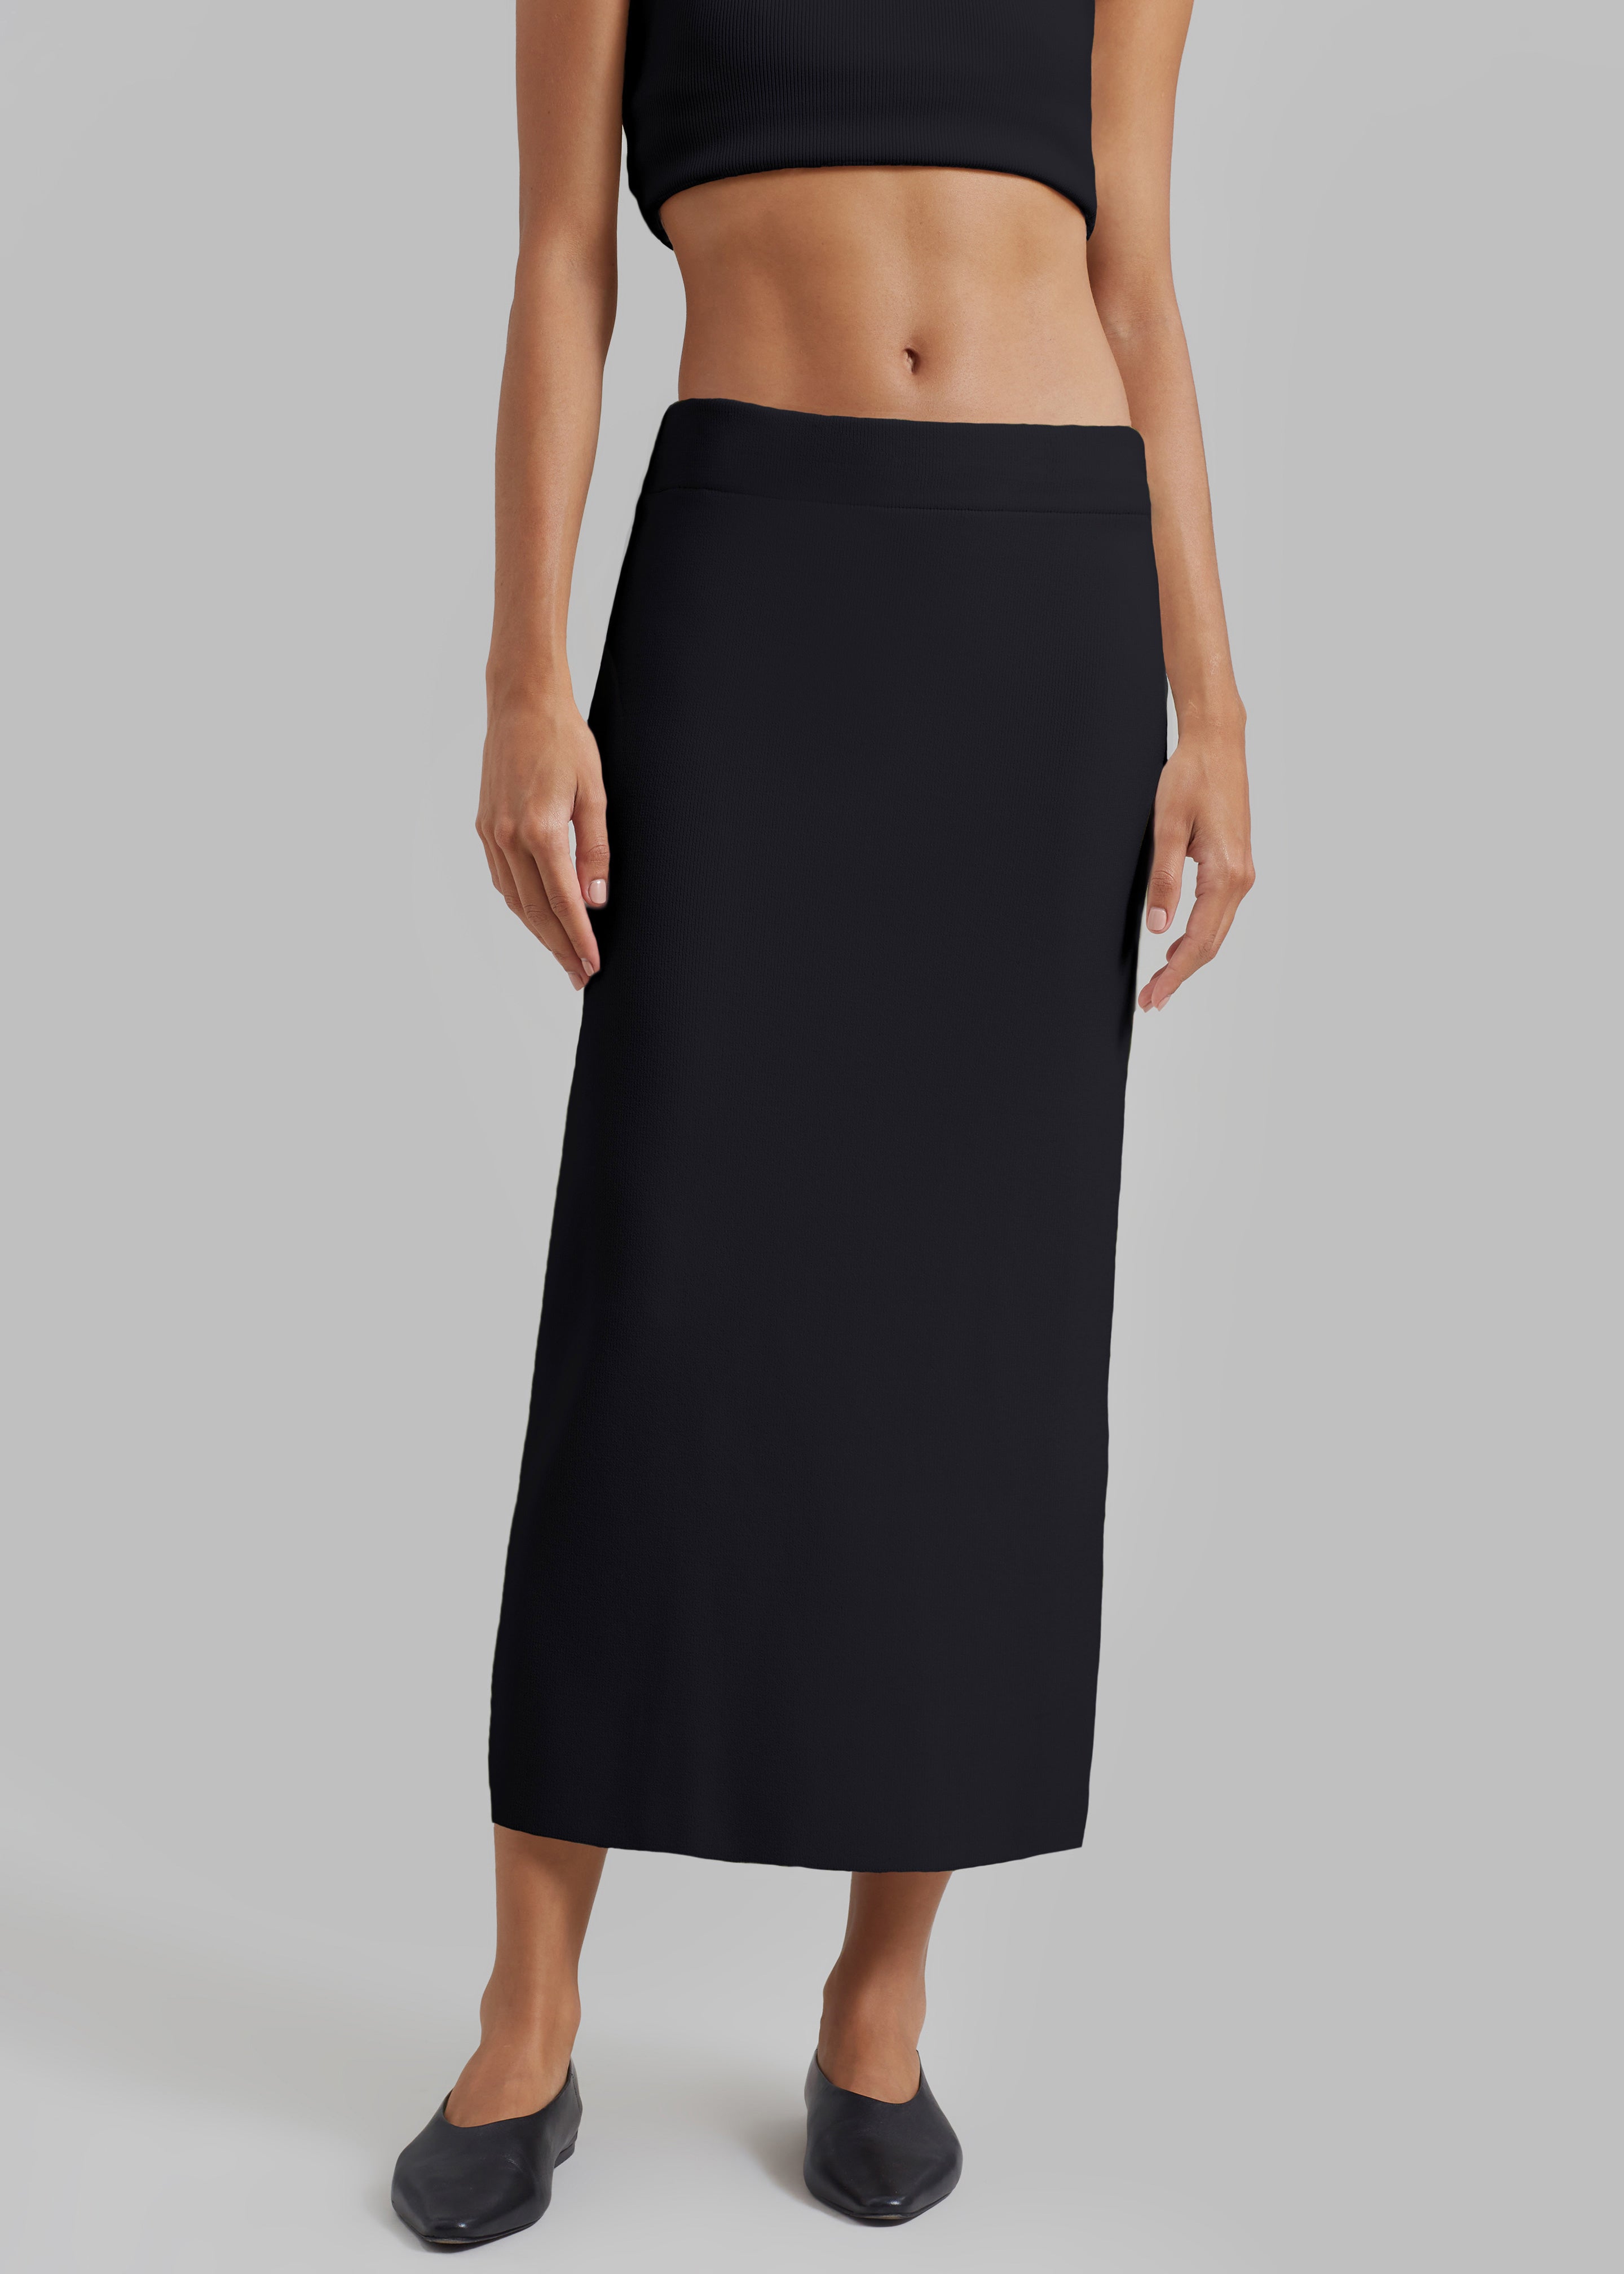 Solange Knit Pencil Skirt - Black - 2